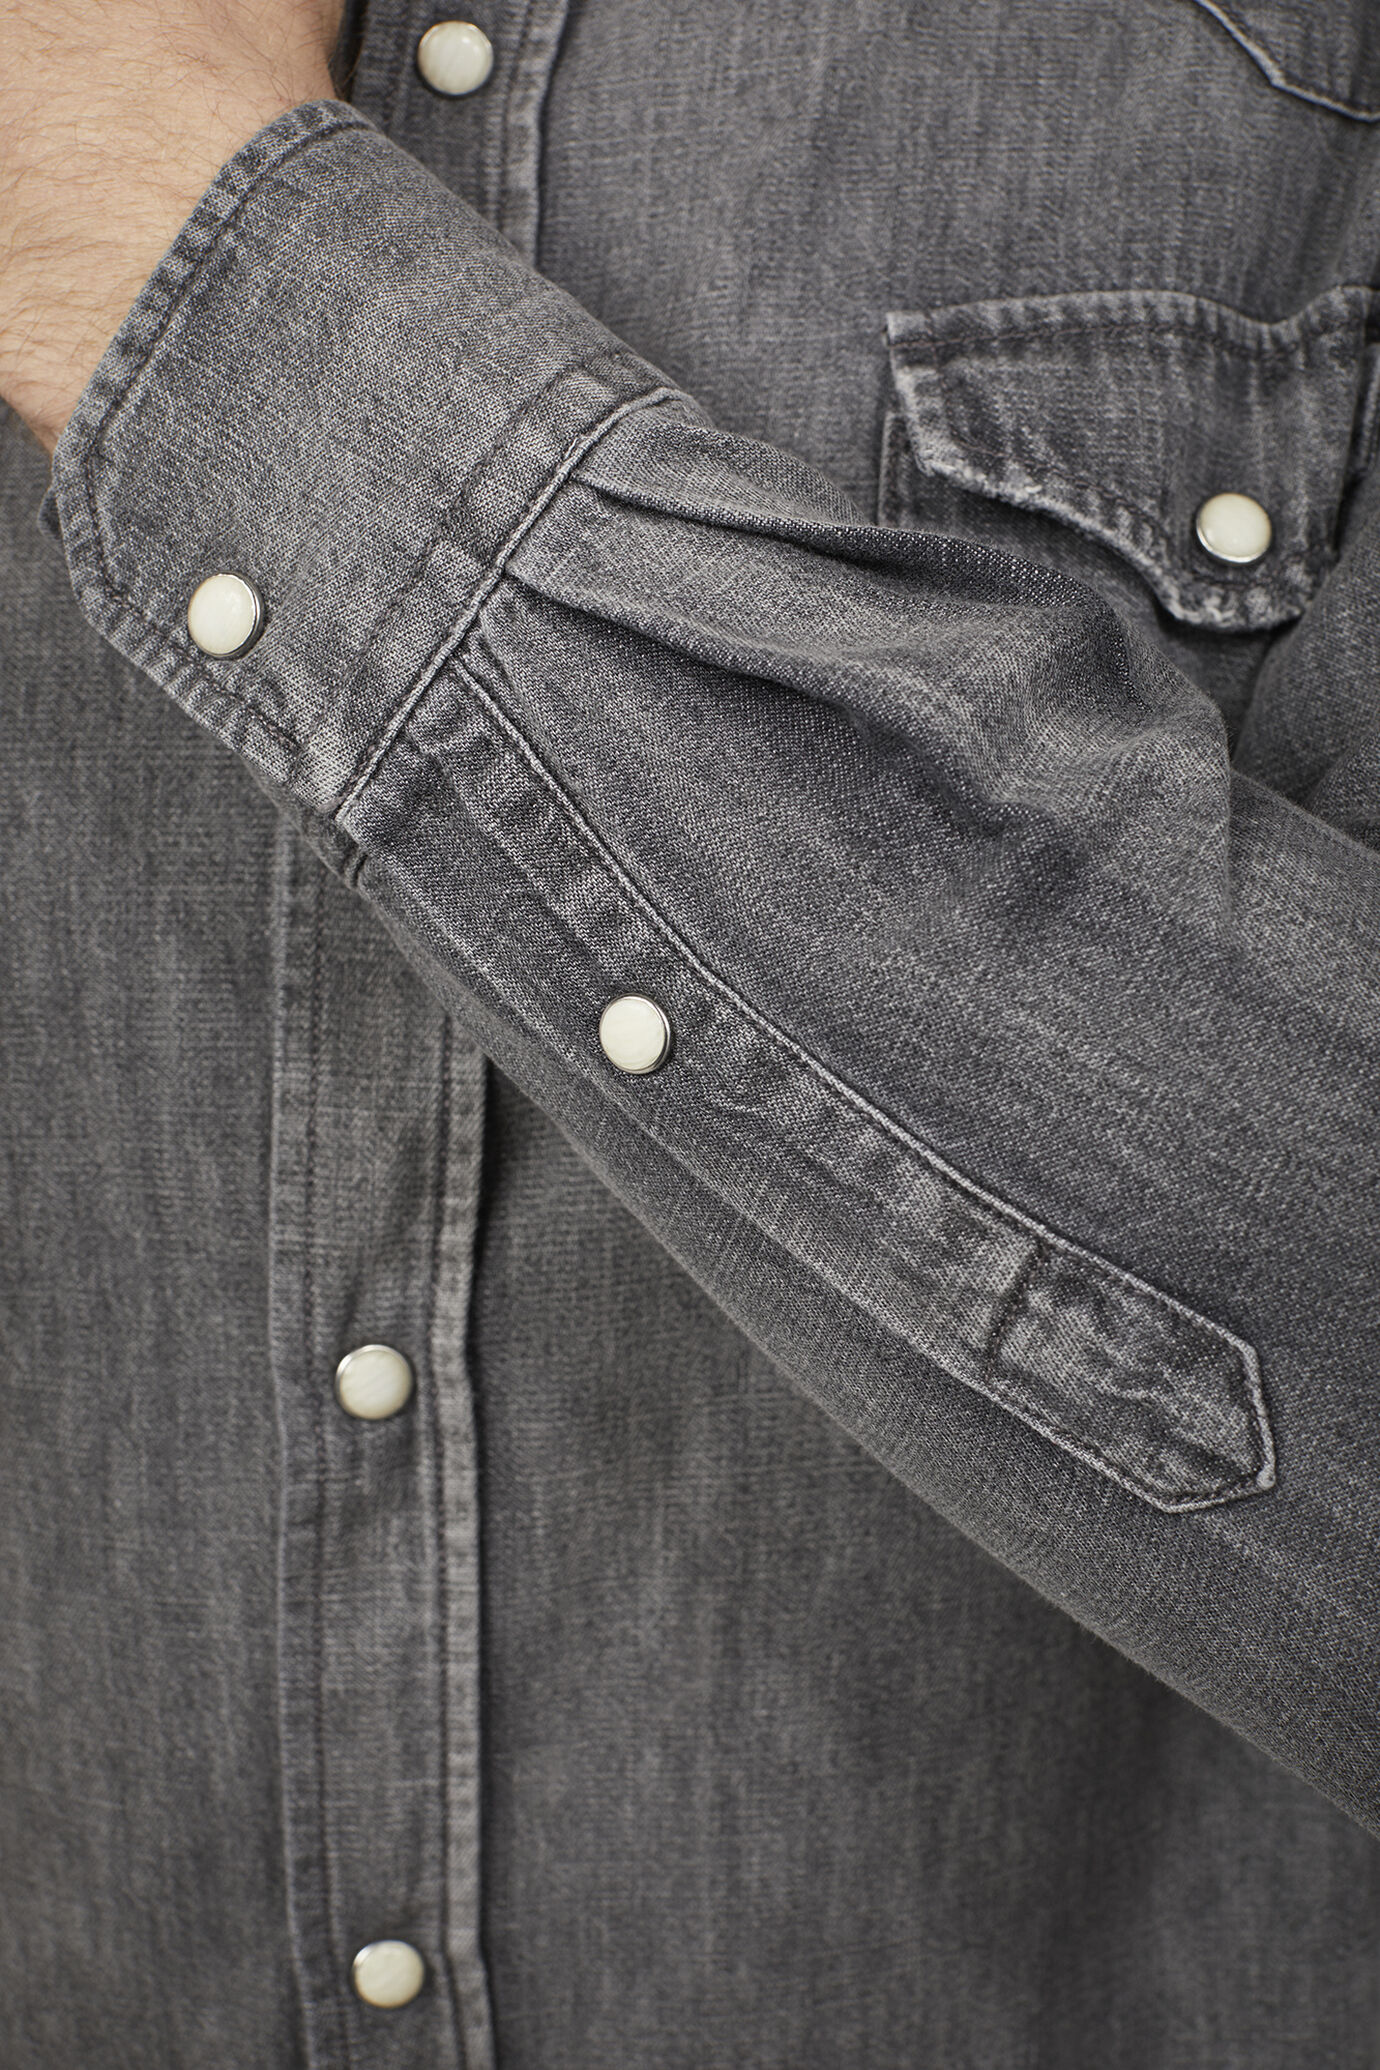 Camicia casual uomo collo classico 100% cotone tessuto denim comfort fit image number 4